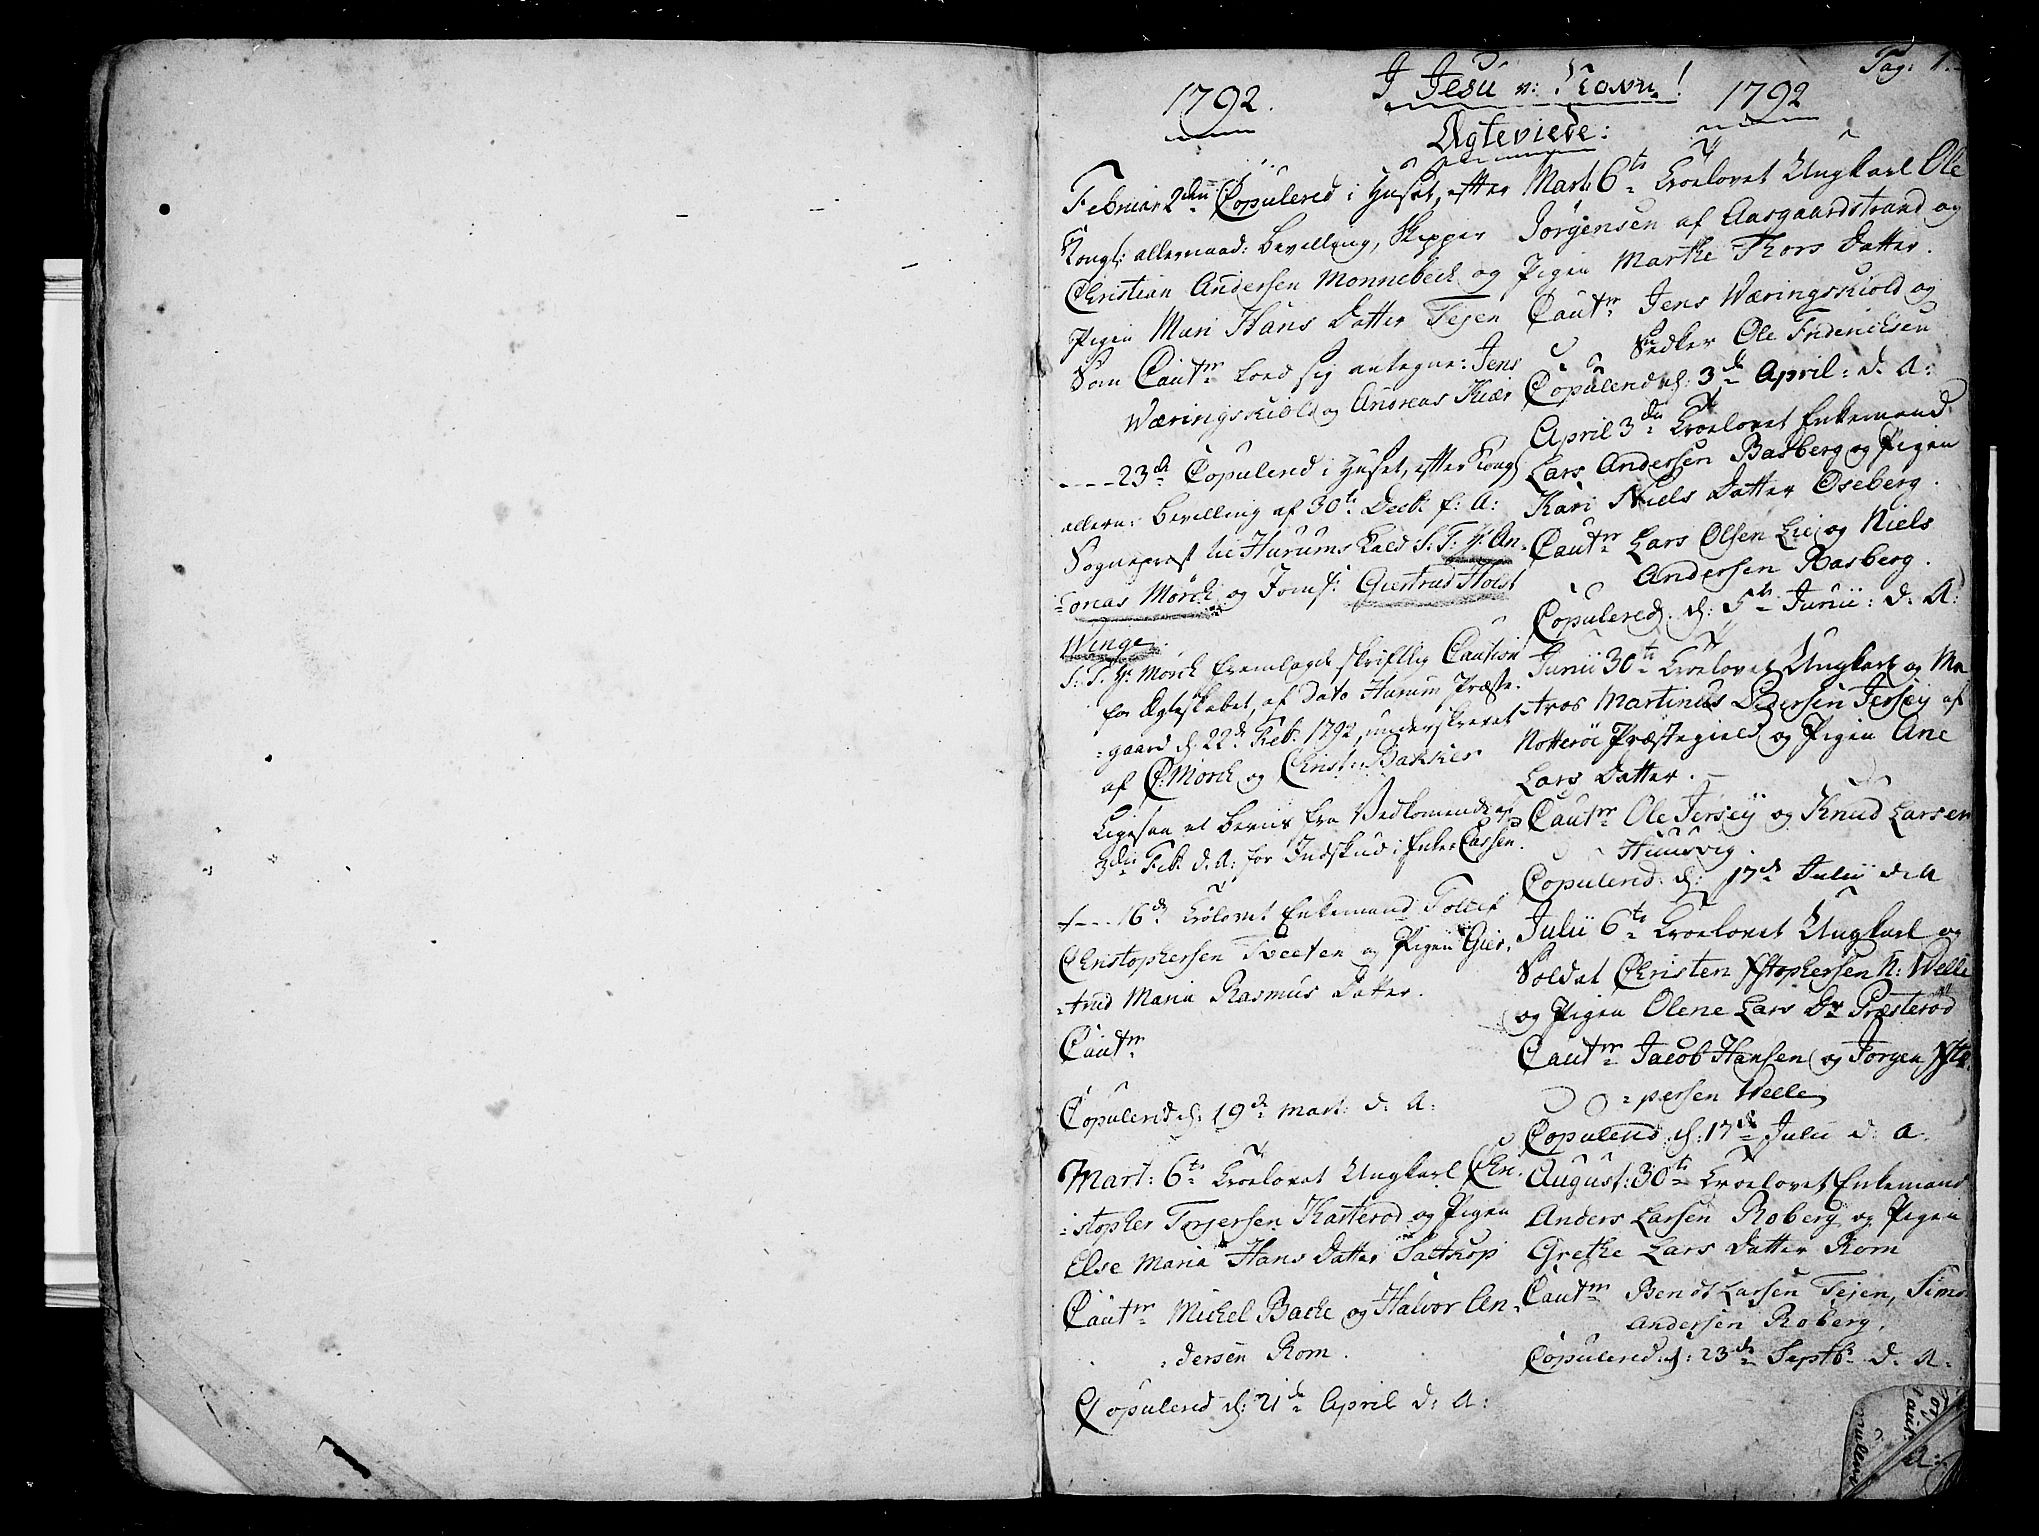 Parish Registry Sako Sem Kirkeboker F Fb L0003 Parish Register Official No Ii 3 1792 1814 P 1 Scanned Archives The National Archives Of Norway